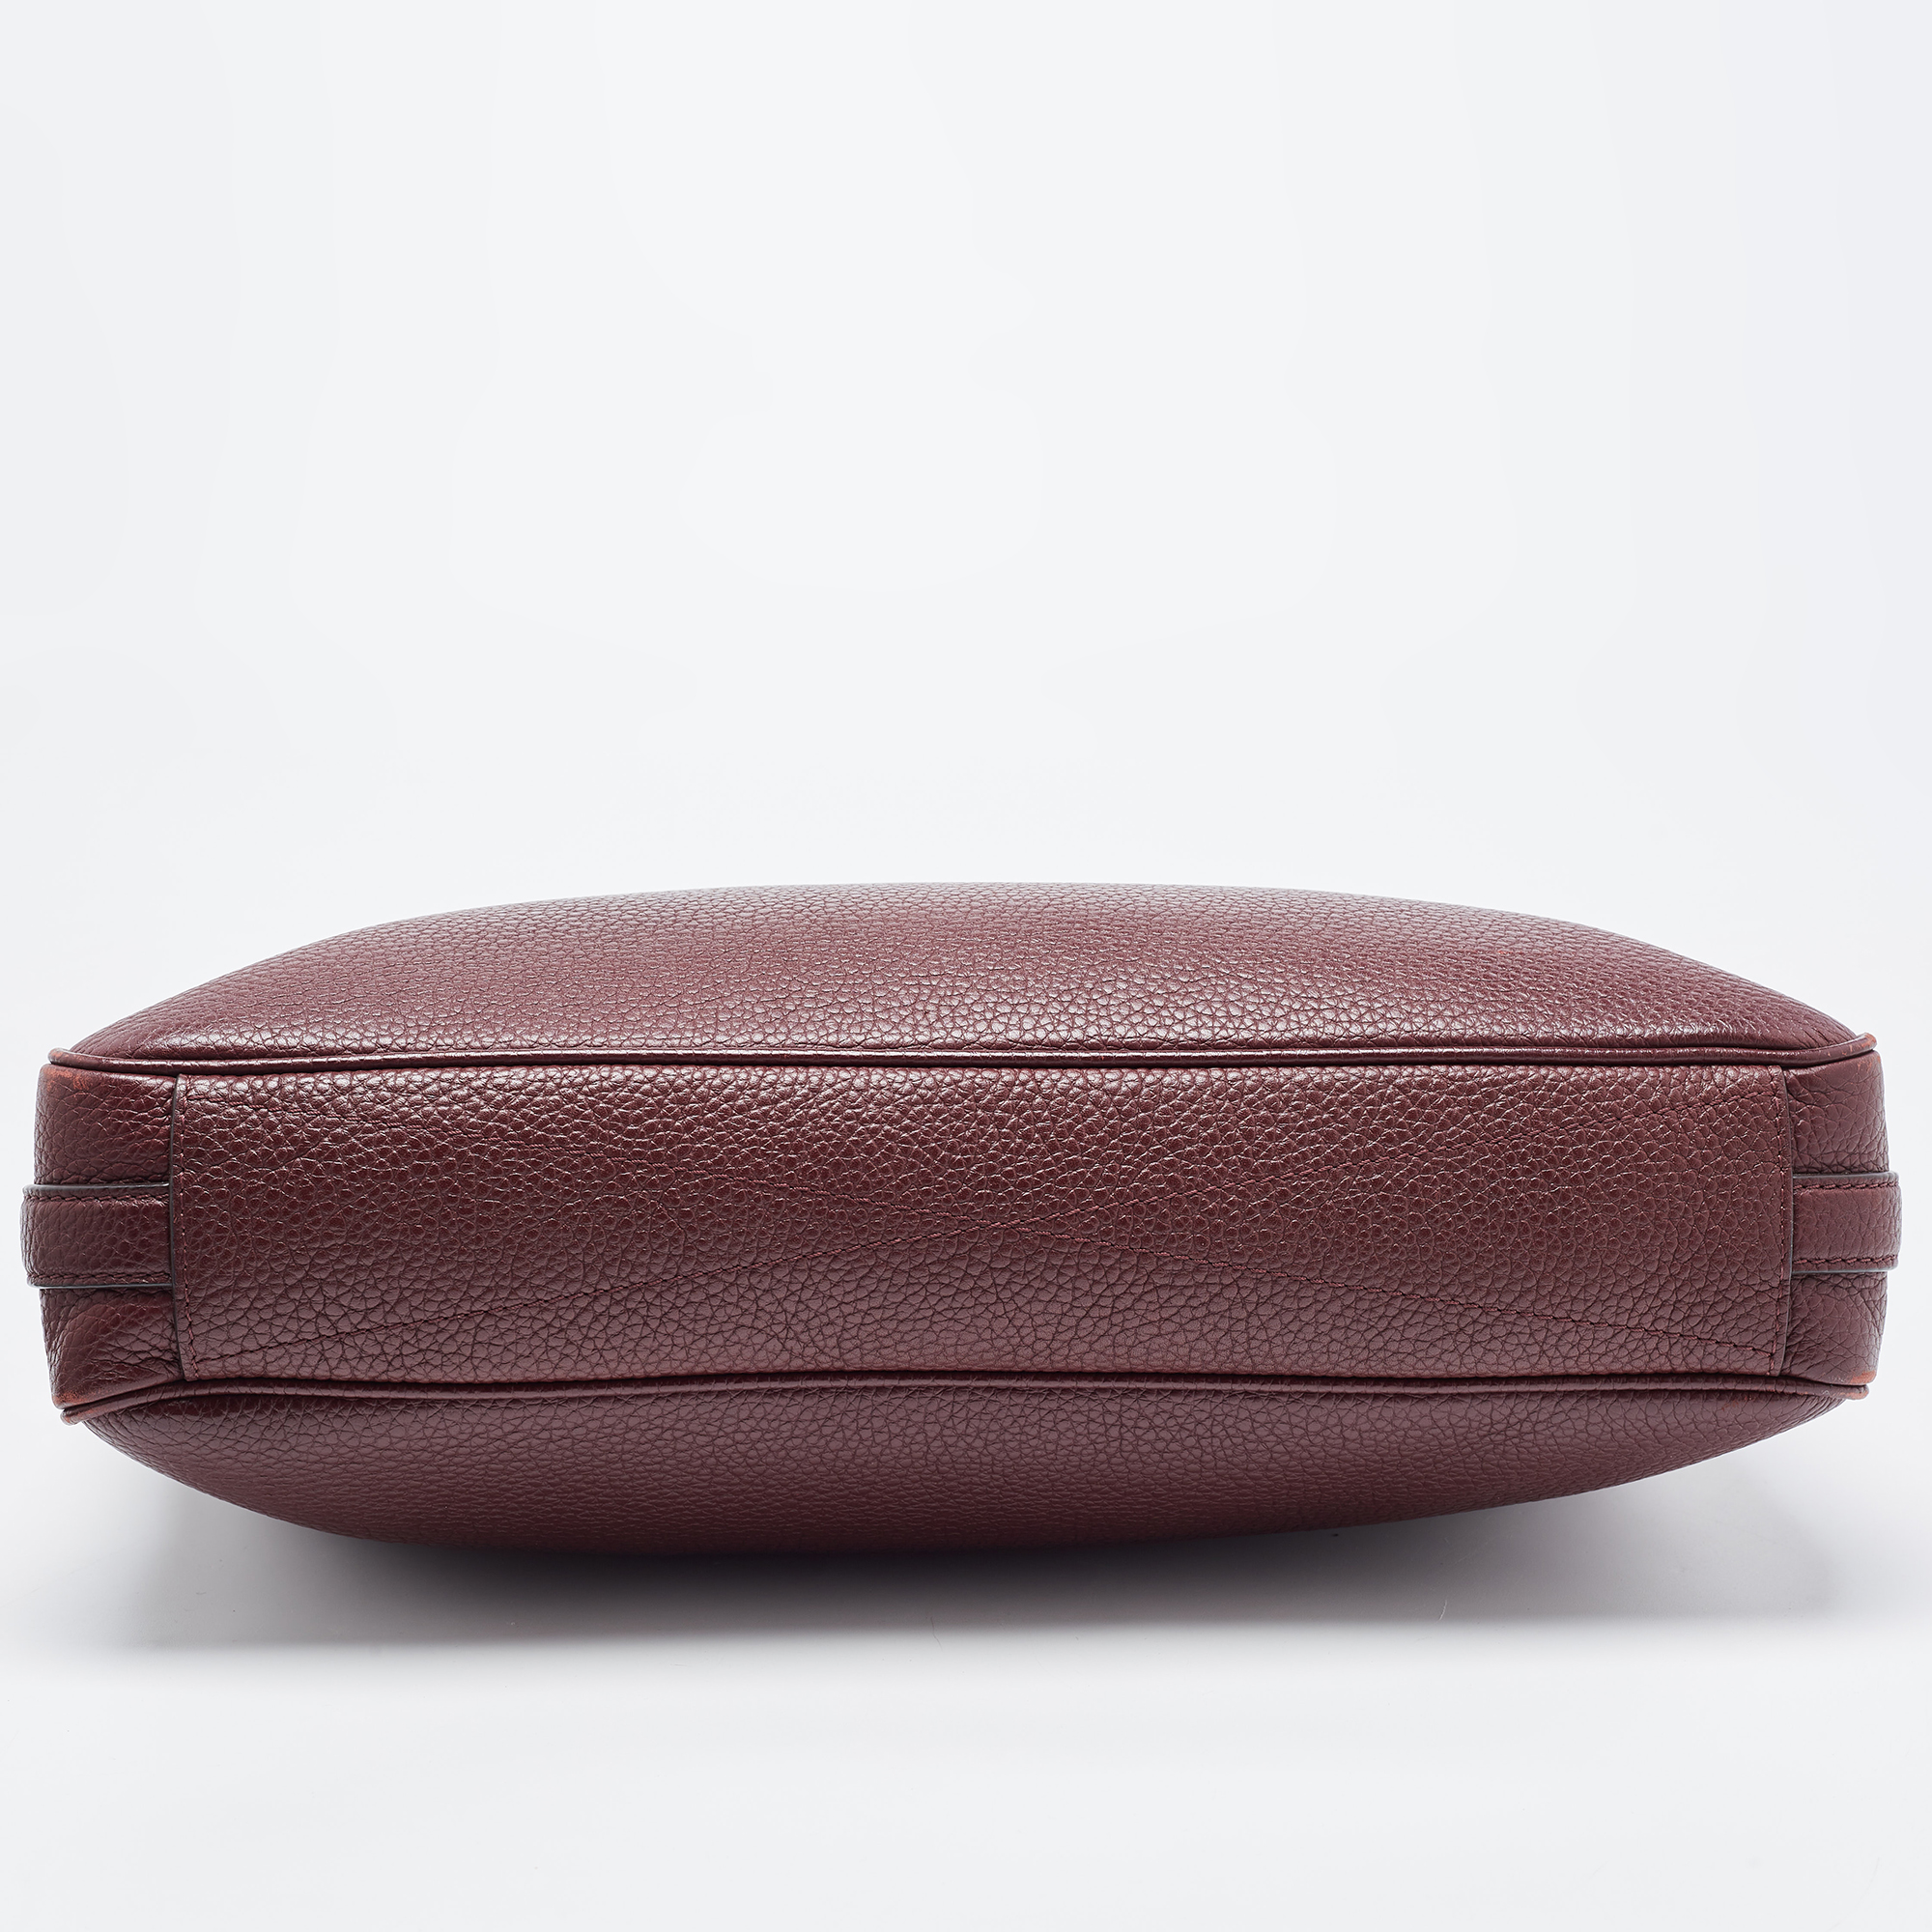 Louis Vuitton Burgundy Taurillon Leather Armand Briefcase Bag